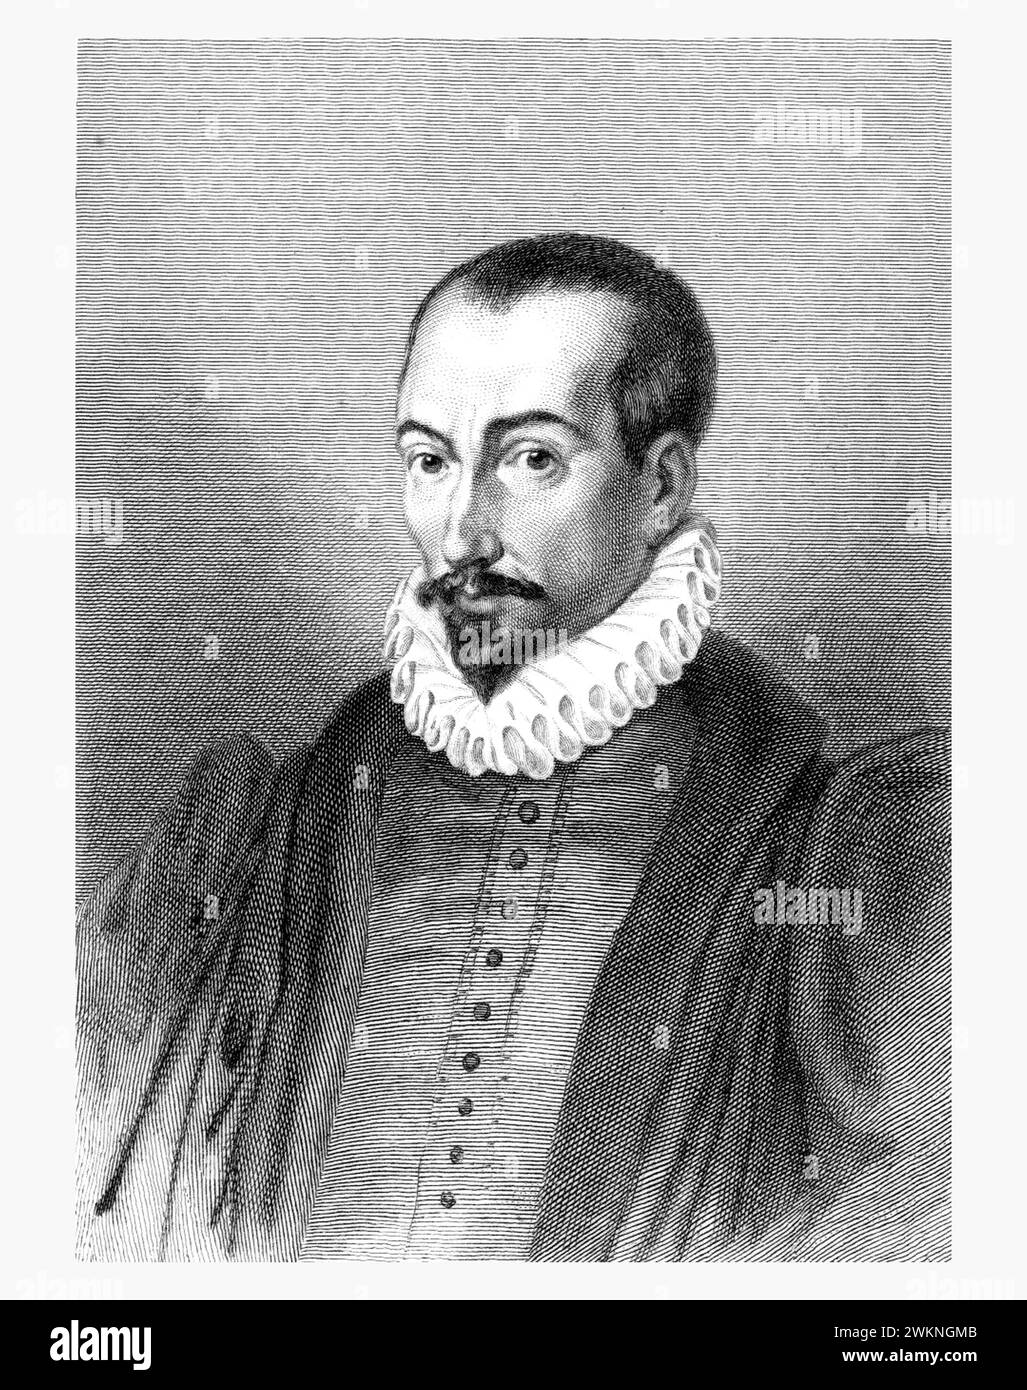 1585 c. , FRANCE : le juriste italien, historien et écrivain PIERRE PITHOU ( 1539 - 1596 ). Portrait gravé par Gavard , pubblished en 1839 . - HISTOIRE - FOTO STORICHE - HISTORIEN - STORICO - SCRITTORE - ÉCRIVAIN - LETTERATURA - LITTÉRATURE - giureconsulto - GIURISTA - LEGGE - LAY - nobili - nobiltà francese - noblesse française - FRANCIA - INCISIONE - GRAVURE - ILLUSTRATION - ILLUSTRAZIONE - collier - collare - colletto - GORGIERA - pizzo - dentelle - barbe - barba --- Archivio GBB Banque D'Images